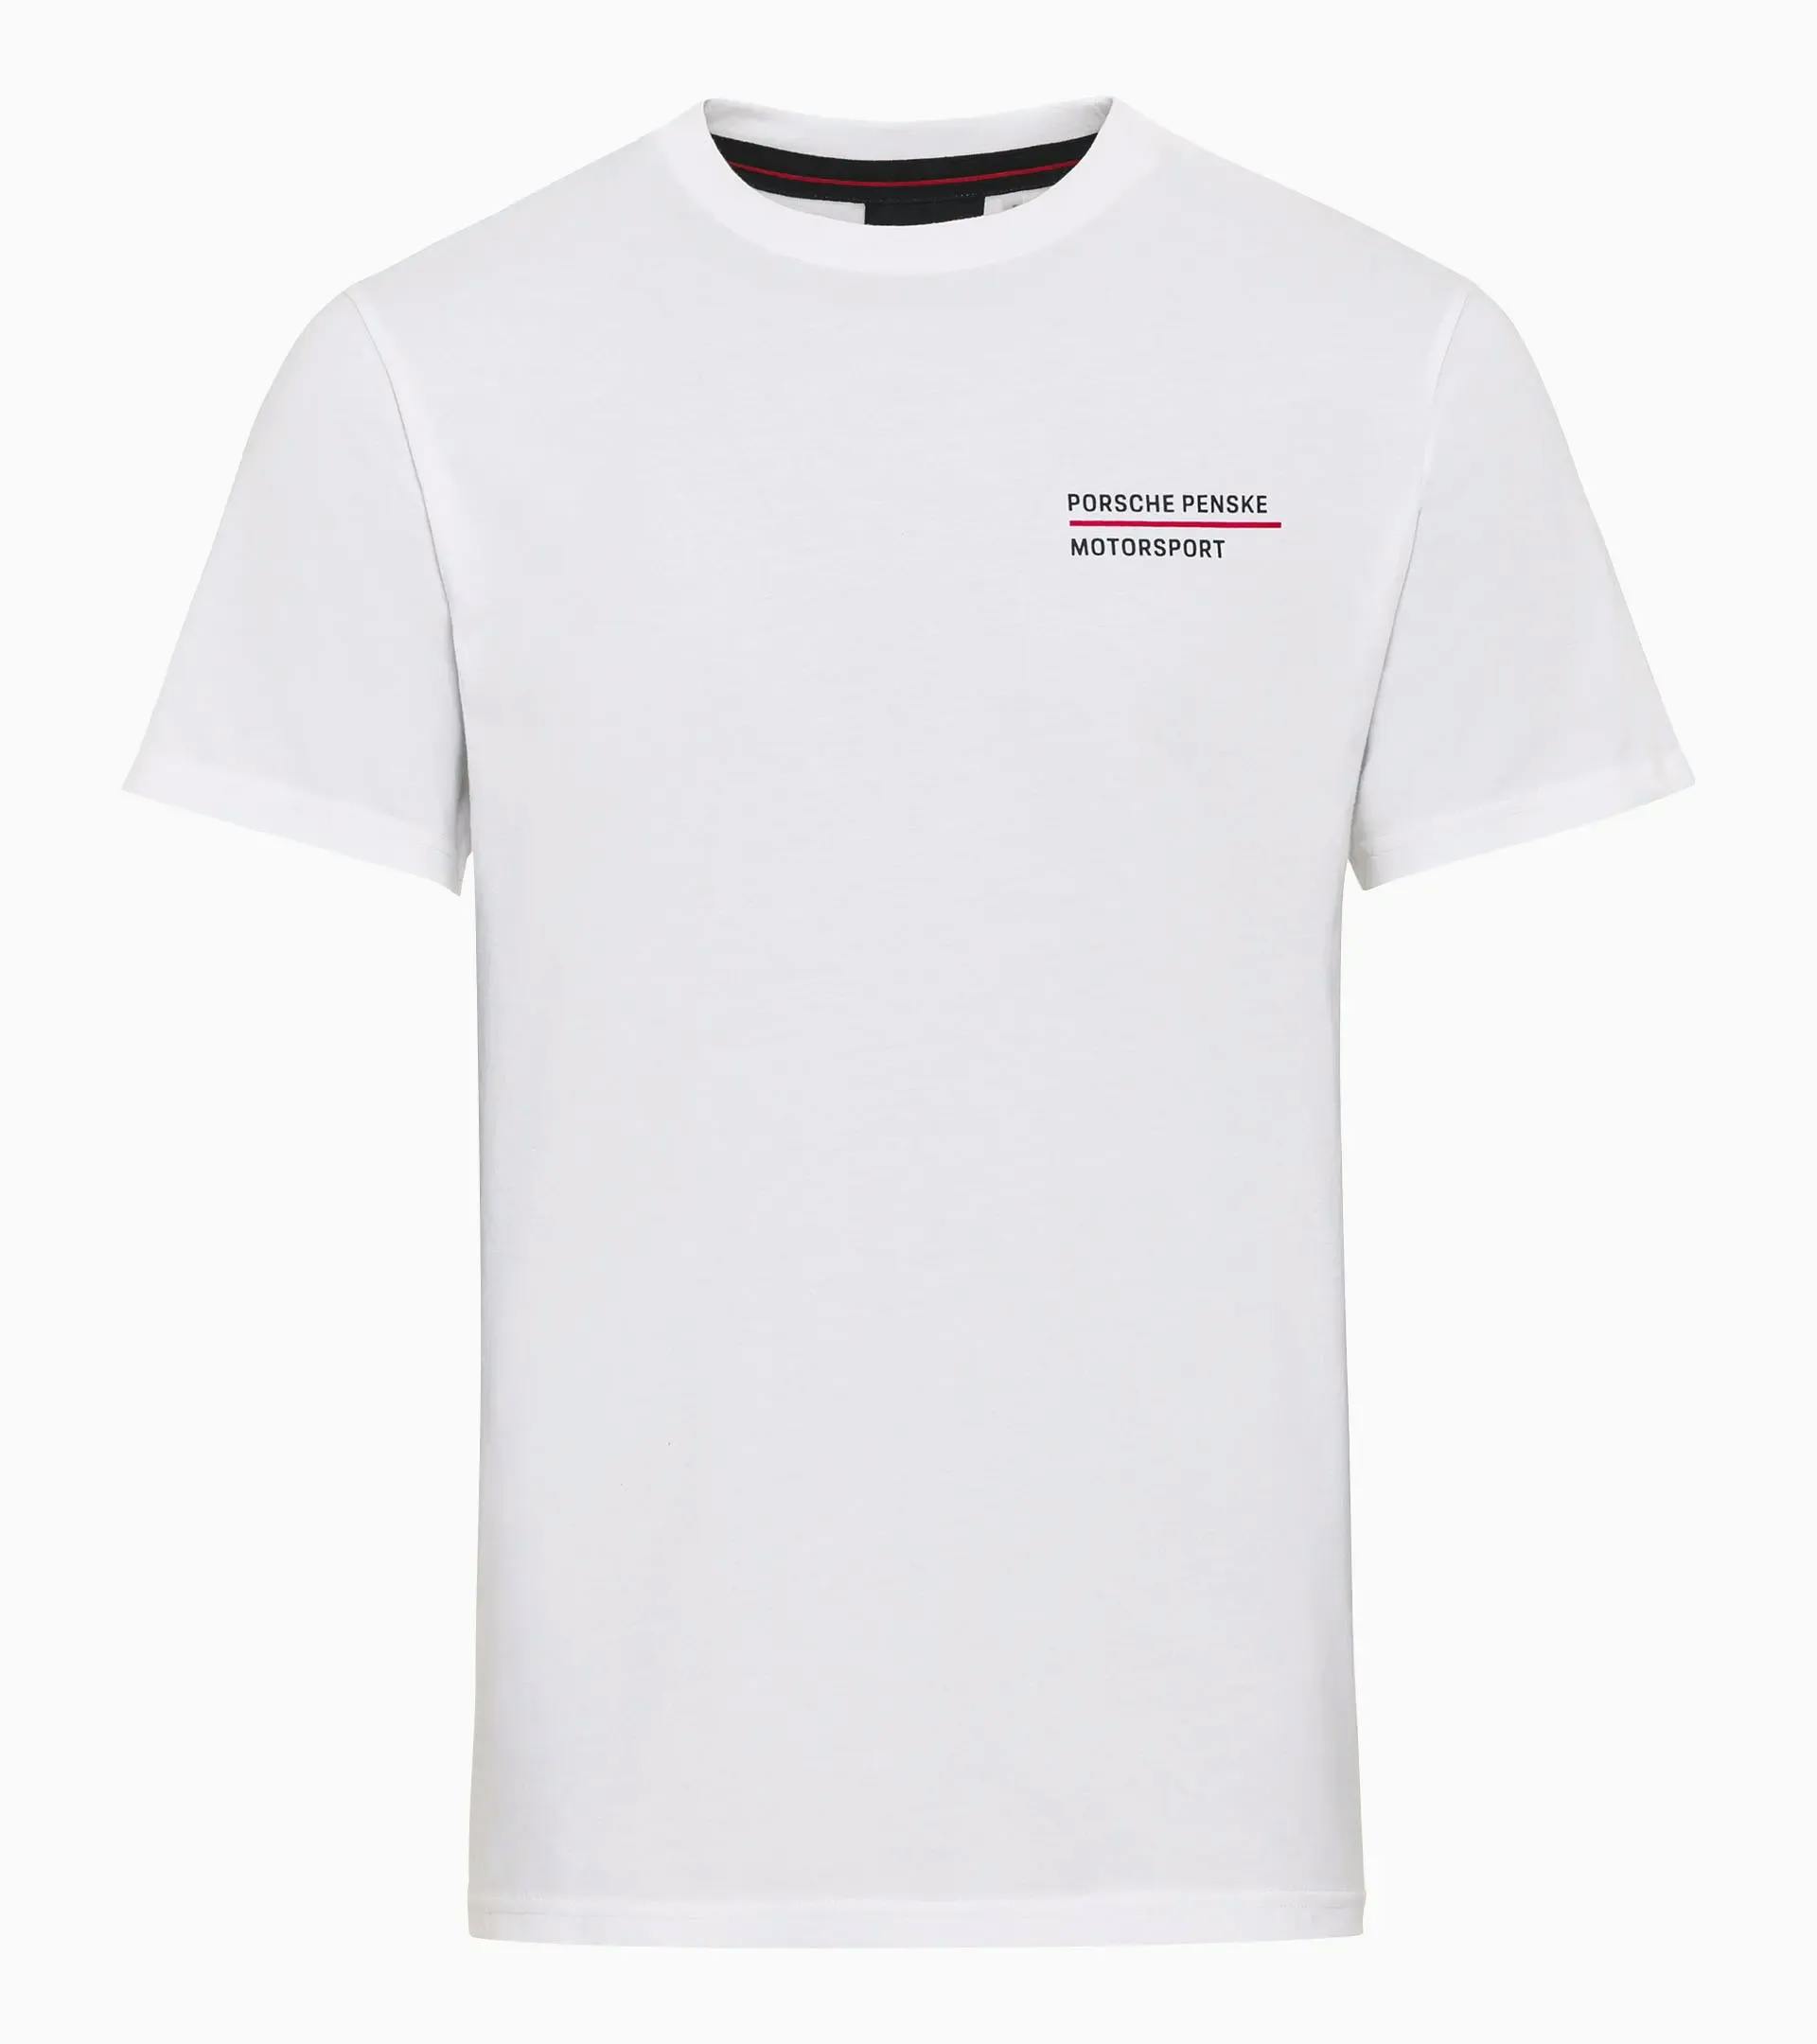 T-shirt unisexe – Porsche Penske Motorsport 2